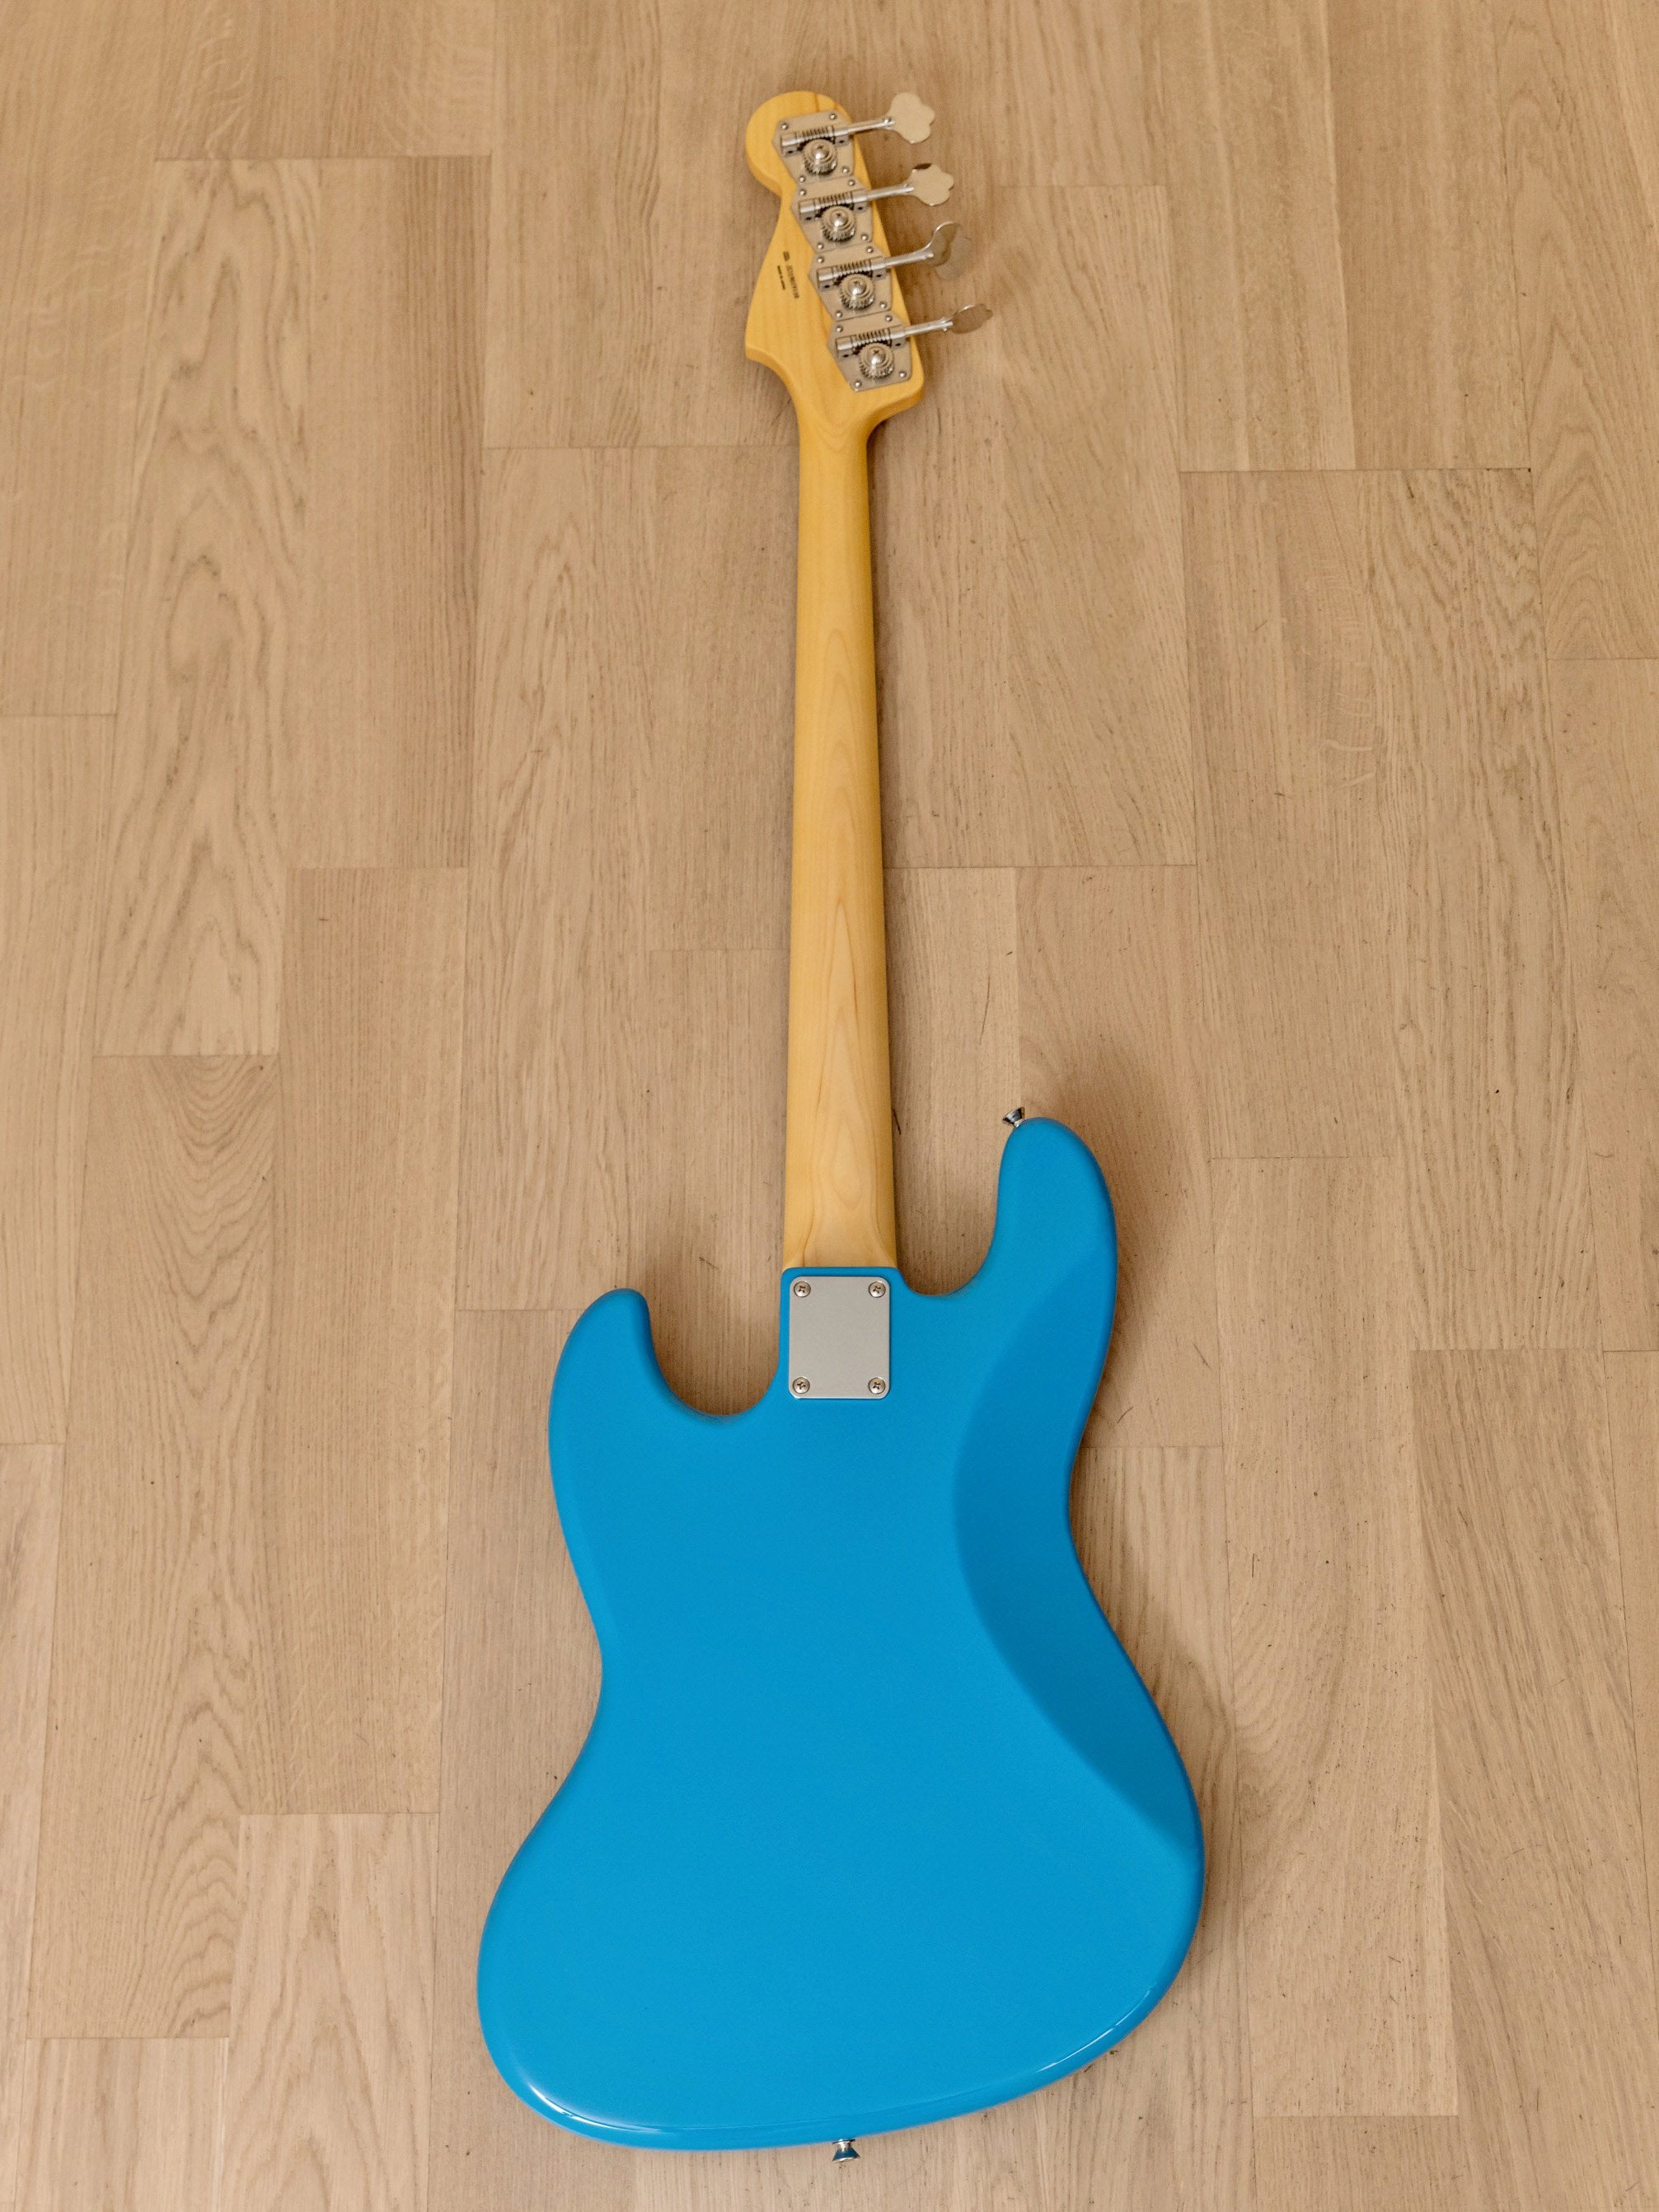 2019 Fender Hybrid 60s Jazz Bass California Blue, Mint Condition w/ USA Pickups, Japan MIJ